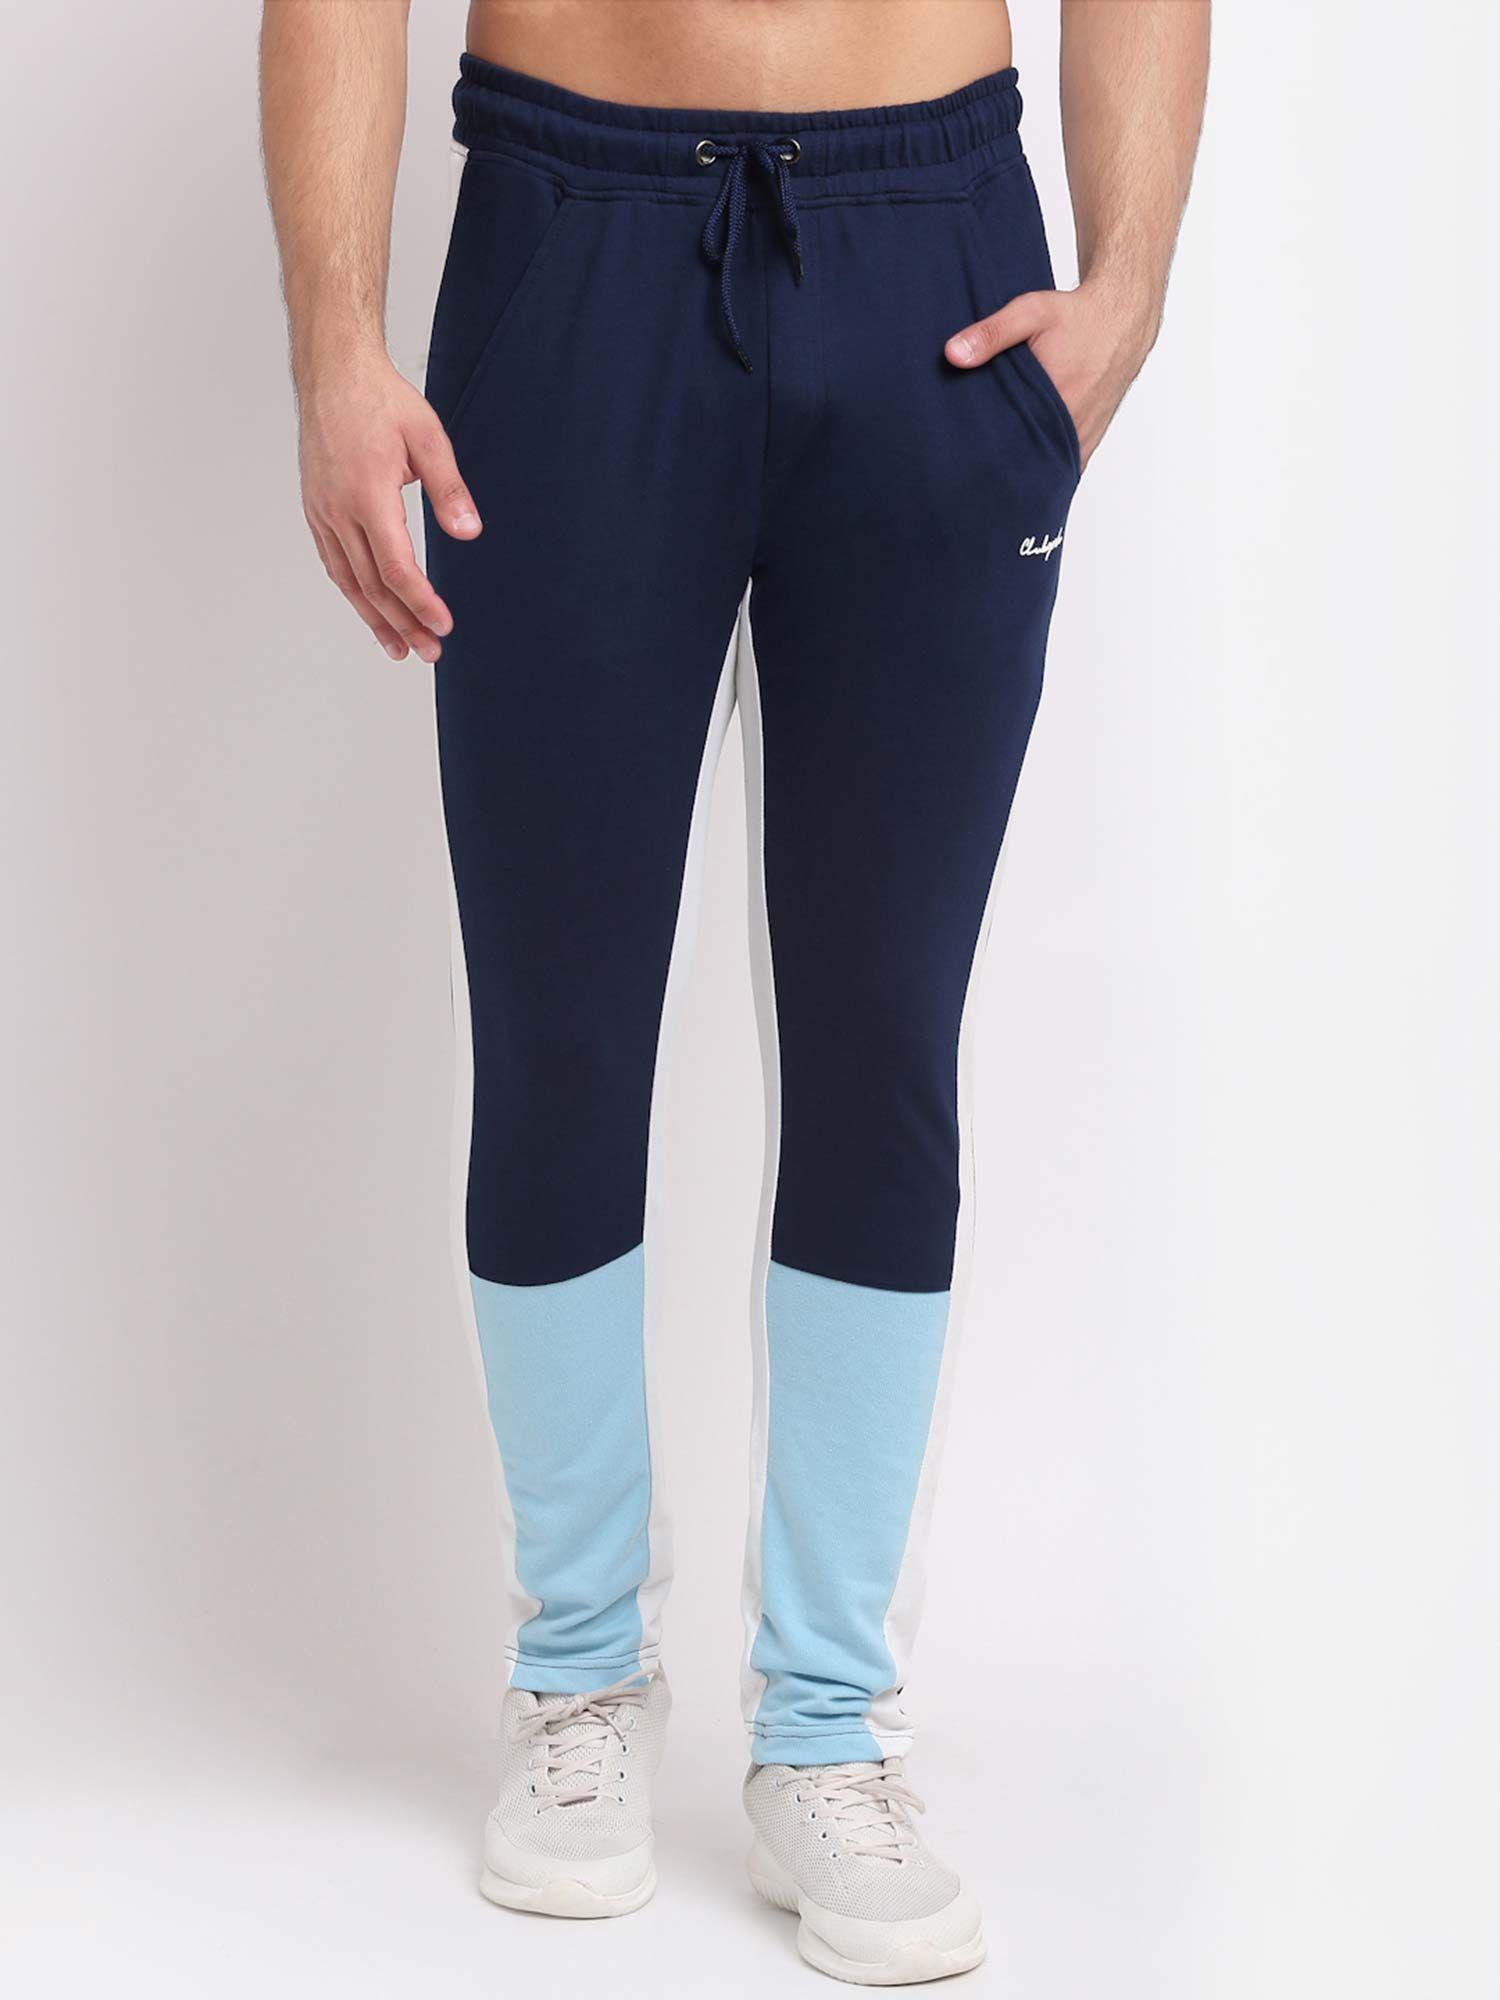 men navy blue colourblocked track pants